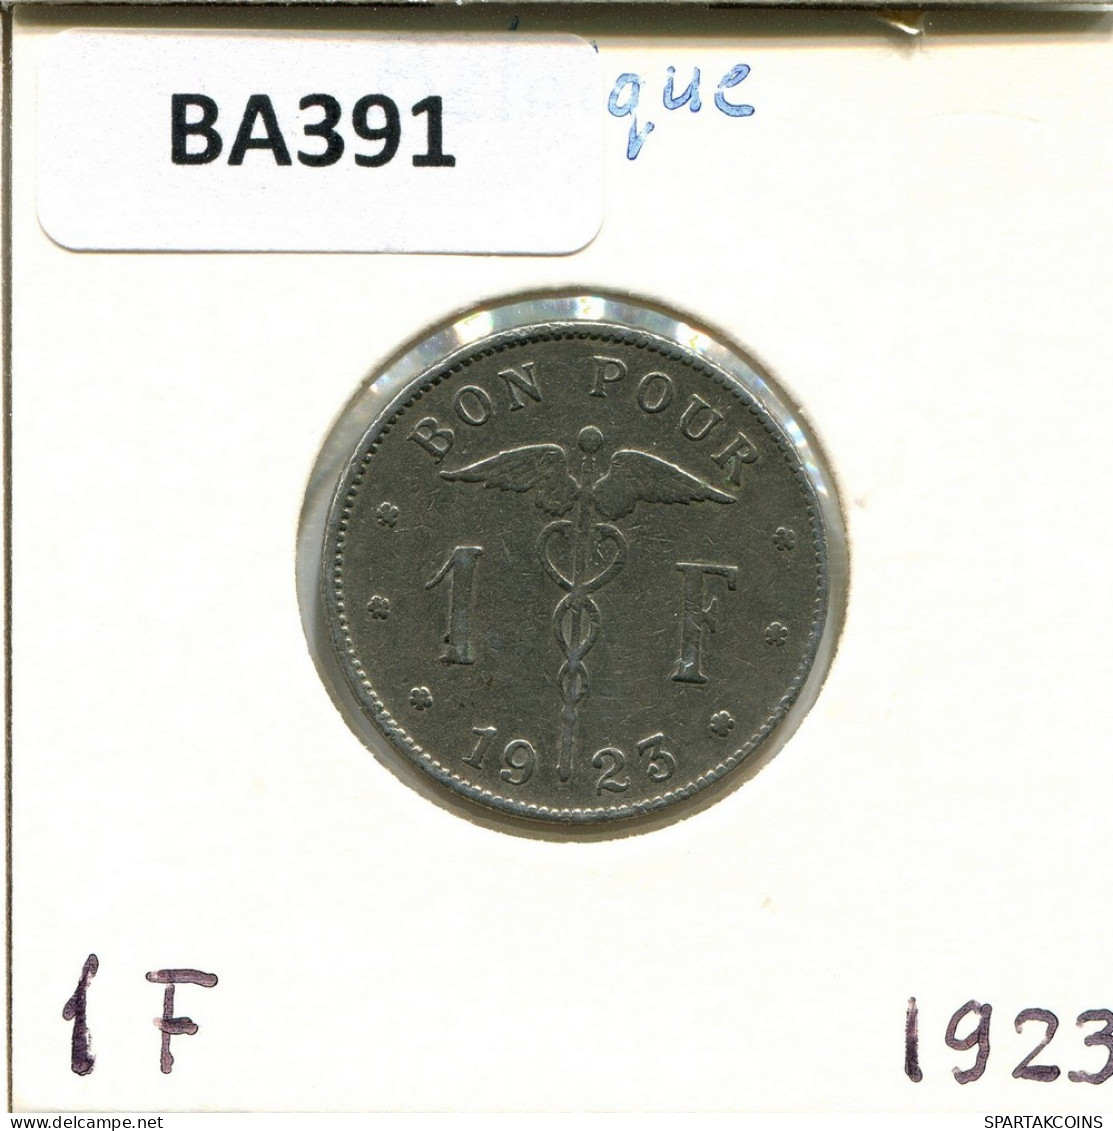 1 FRANC 1923 BELGIEN BELGIUM Münze Französisch Text #BA391.D.A - 1 Franco